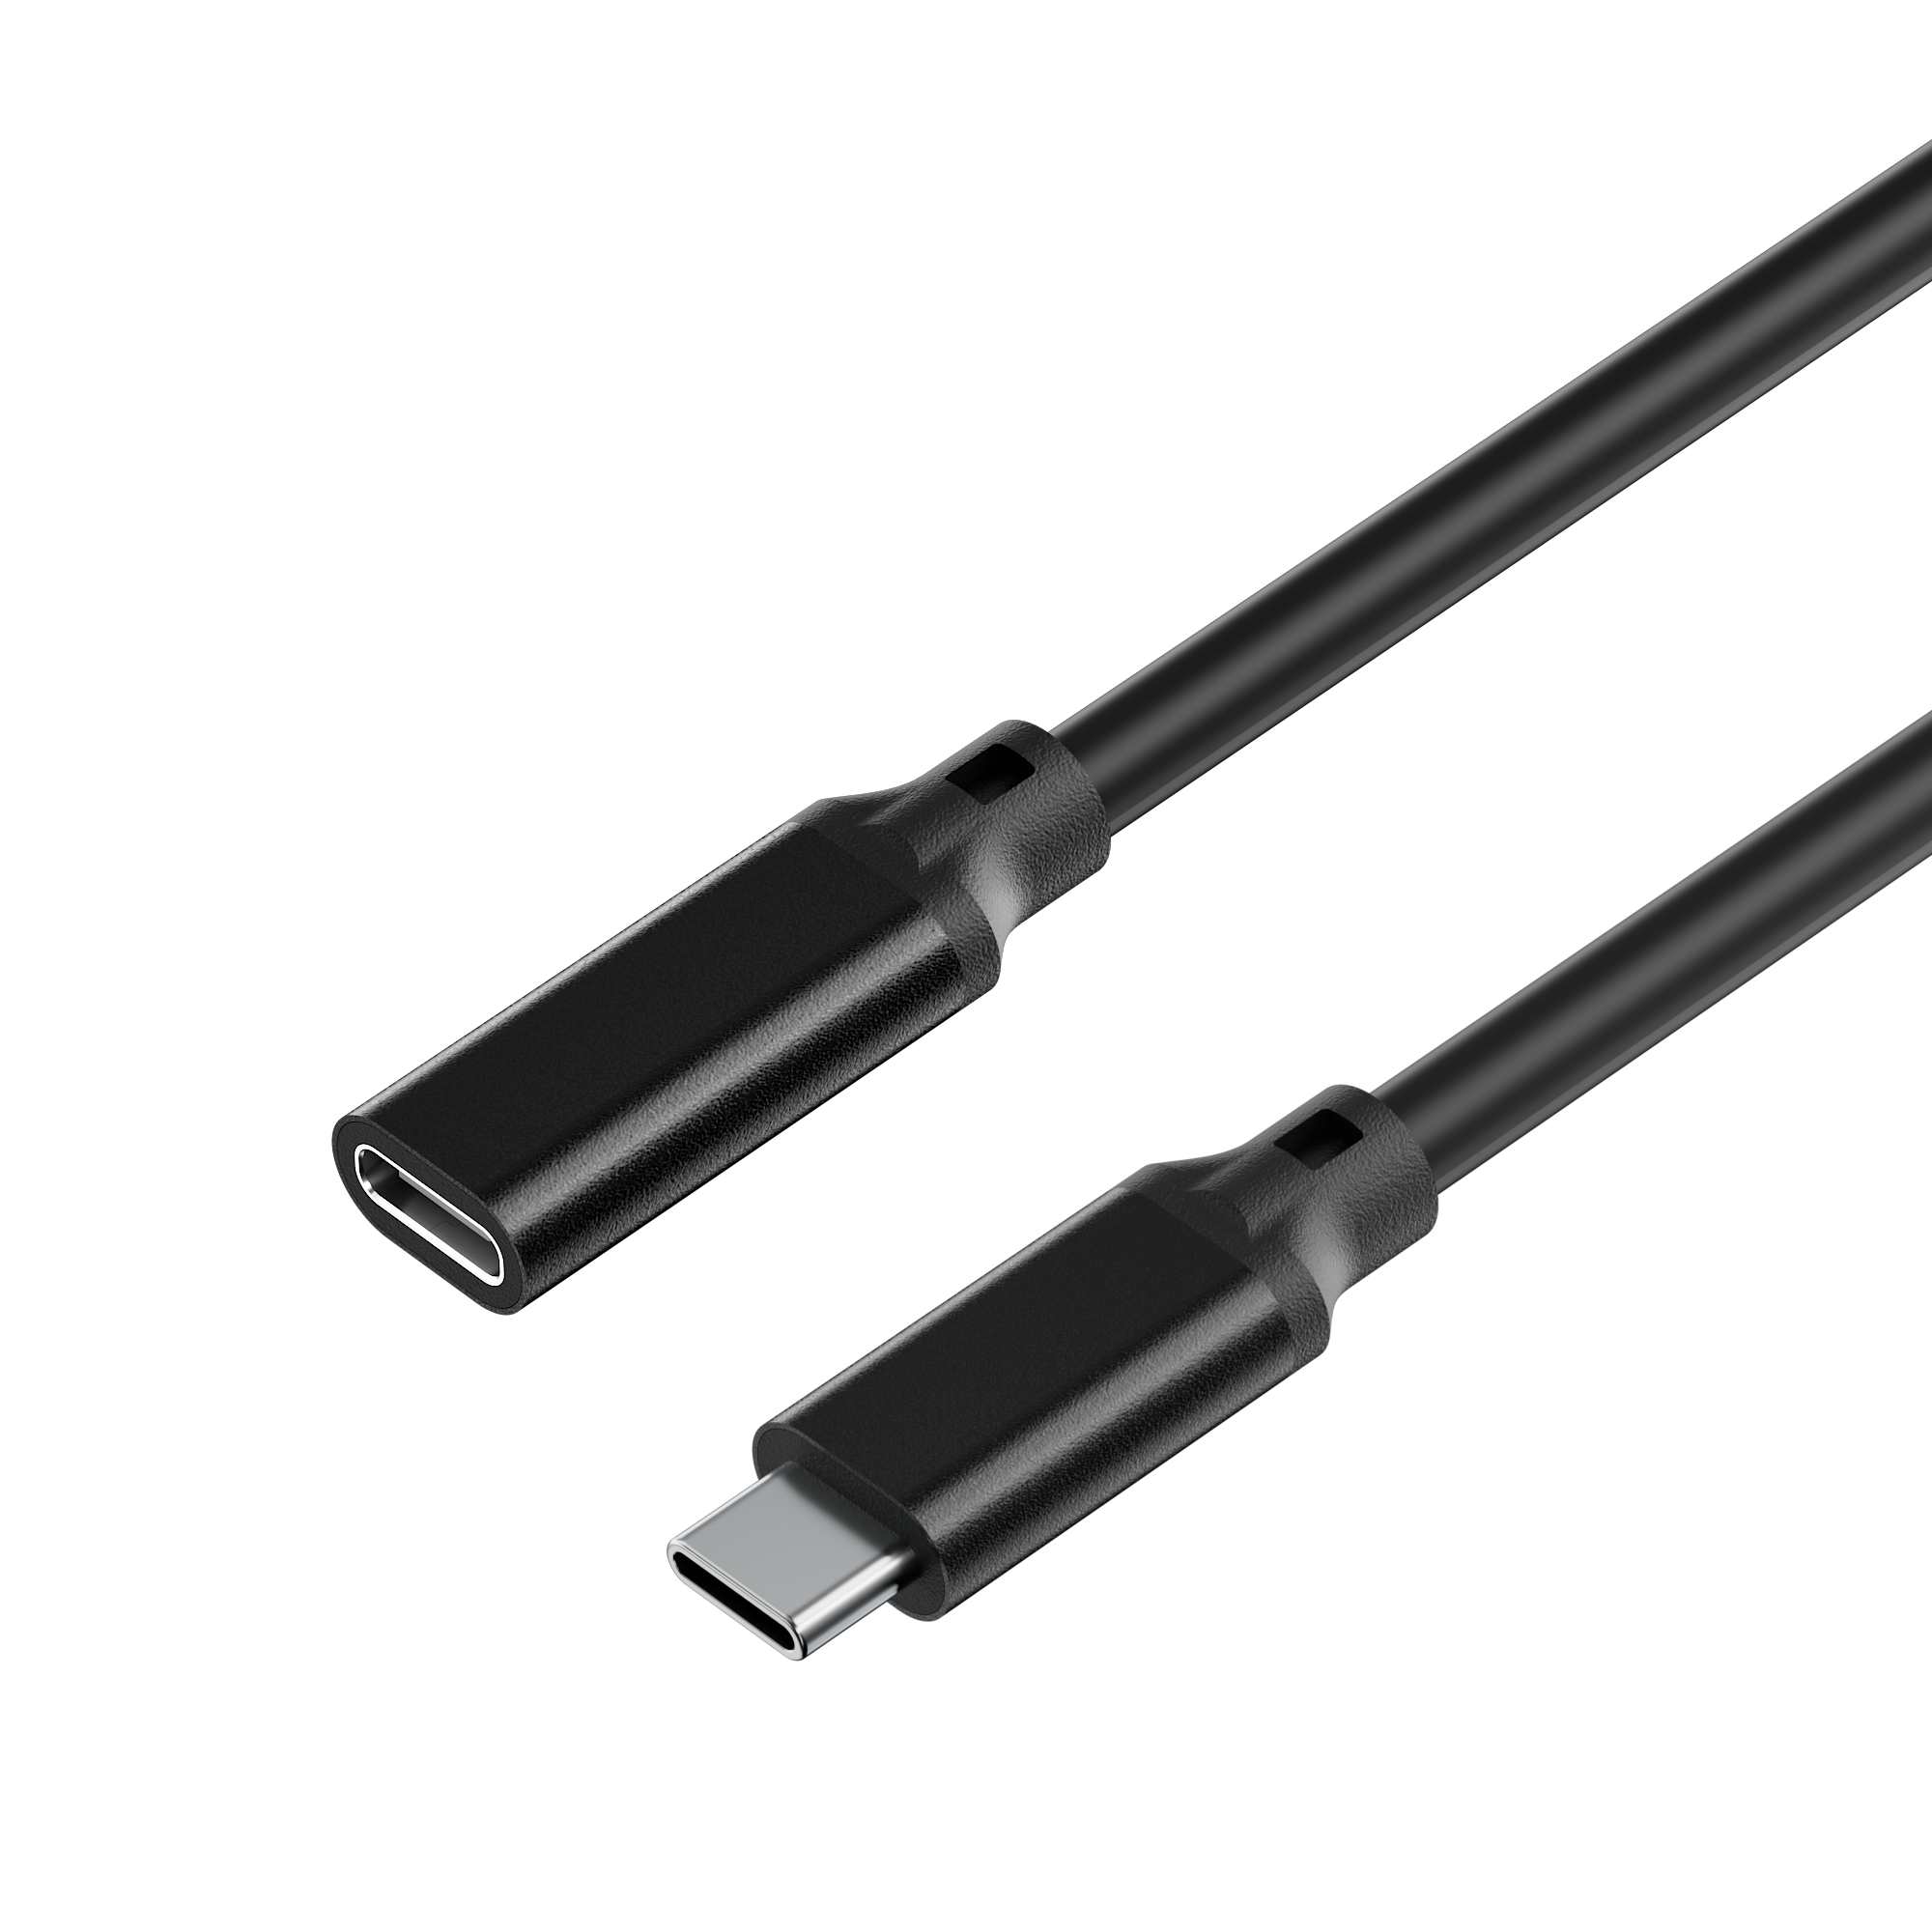 2 USB kabel meter USB-C zu ROLIO USB-C Kabel